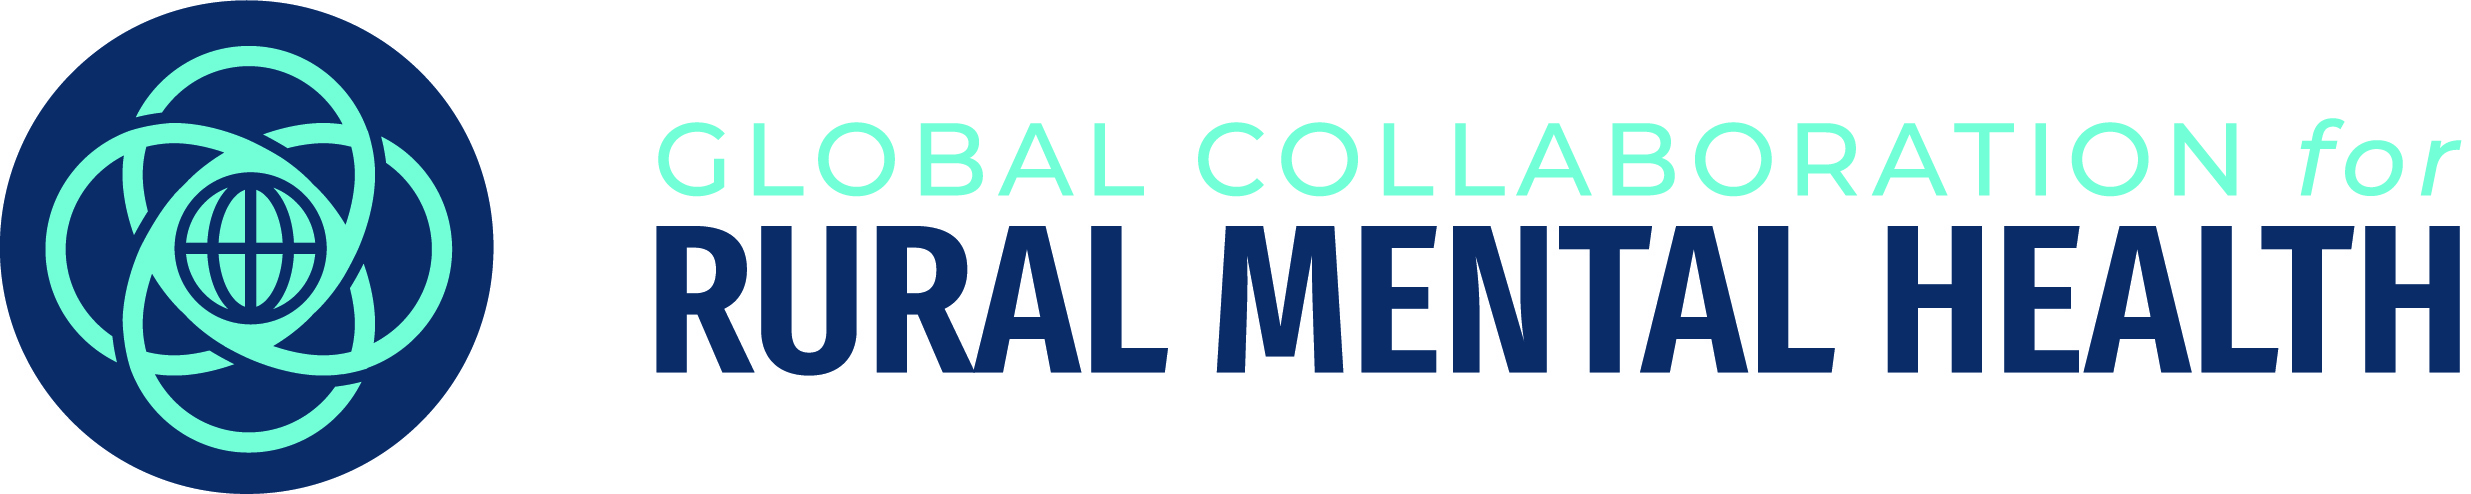 Global Collaboration for Rural Mental Health Logo